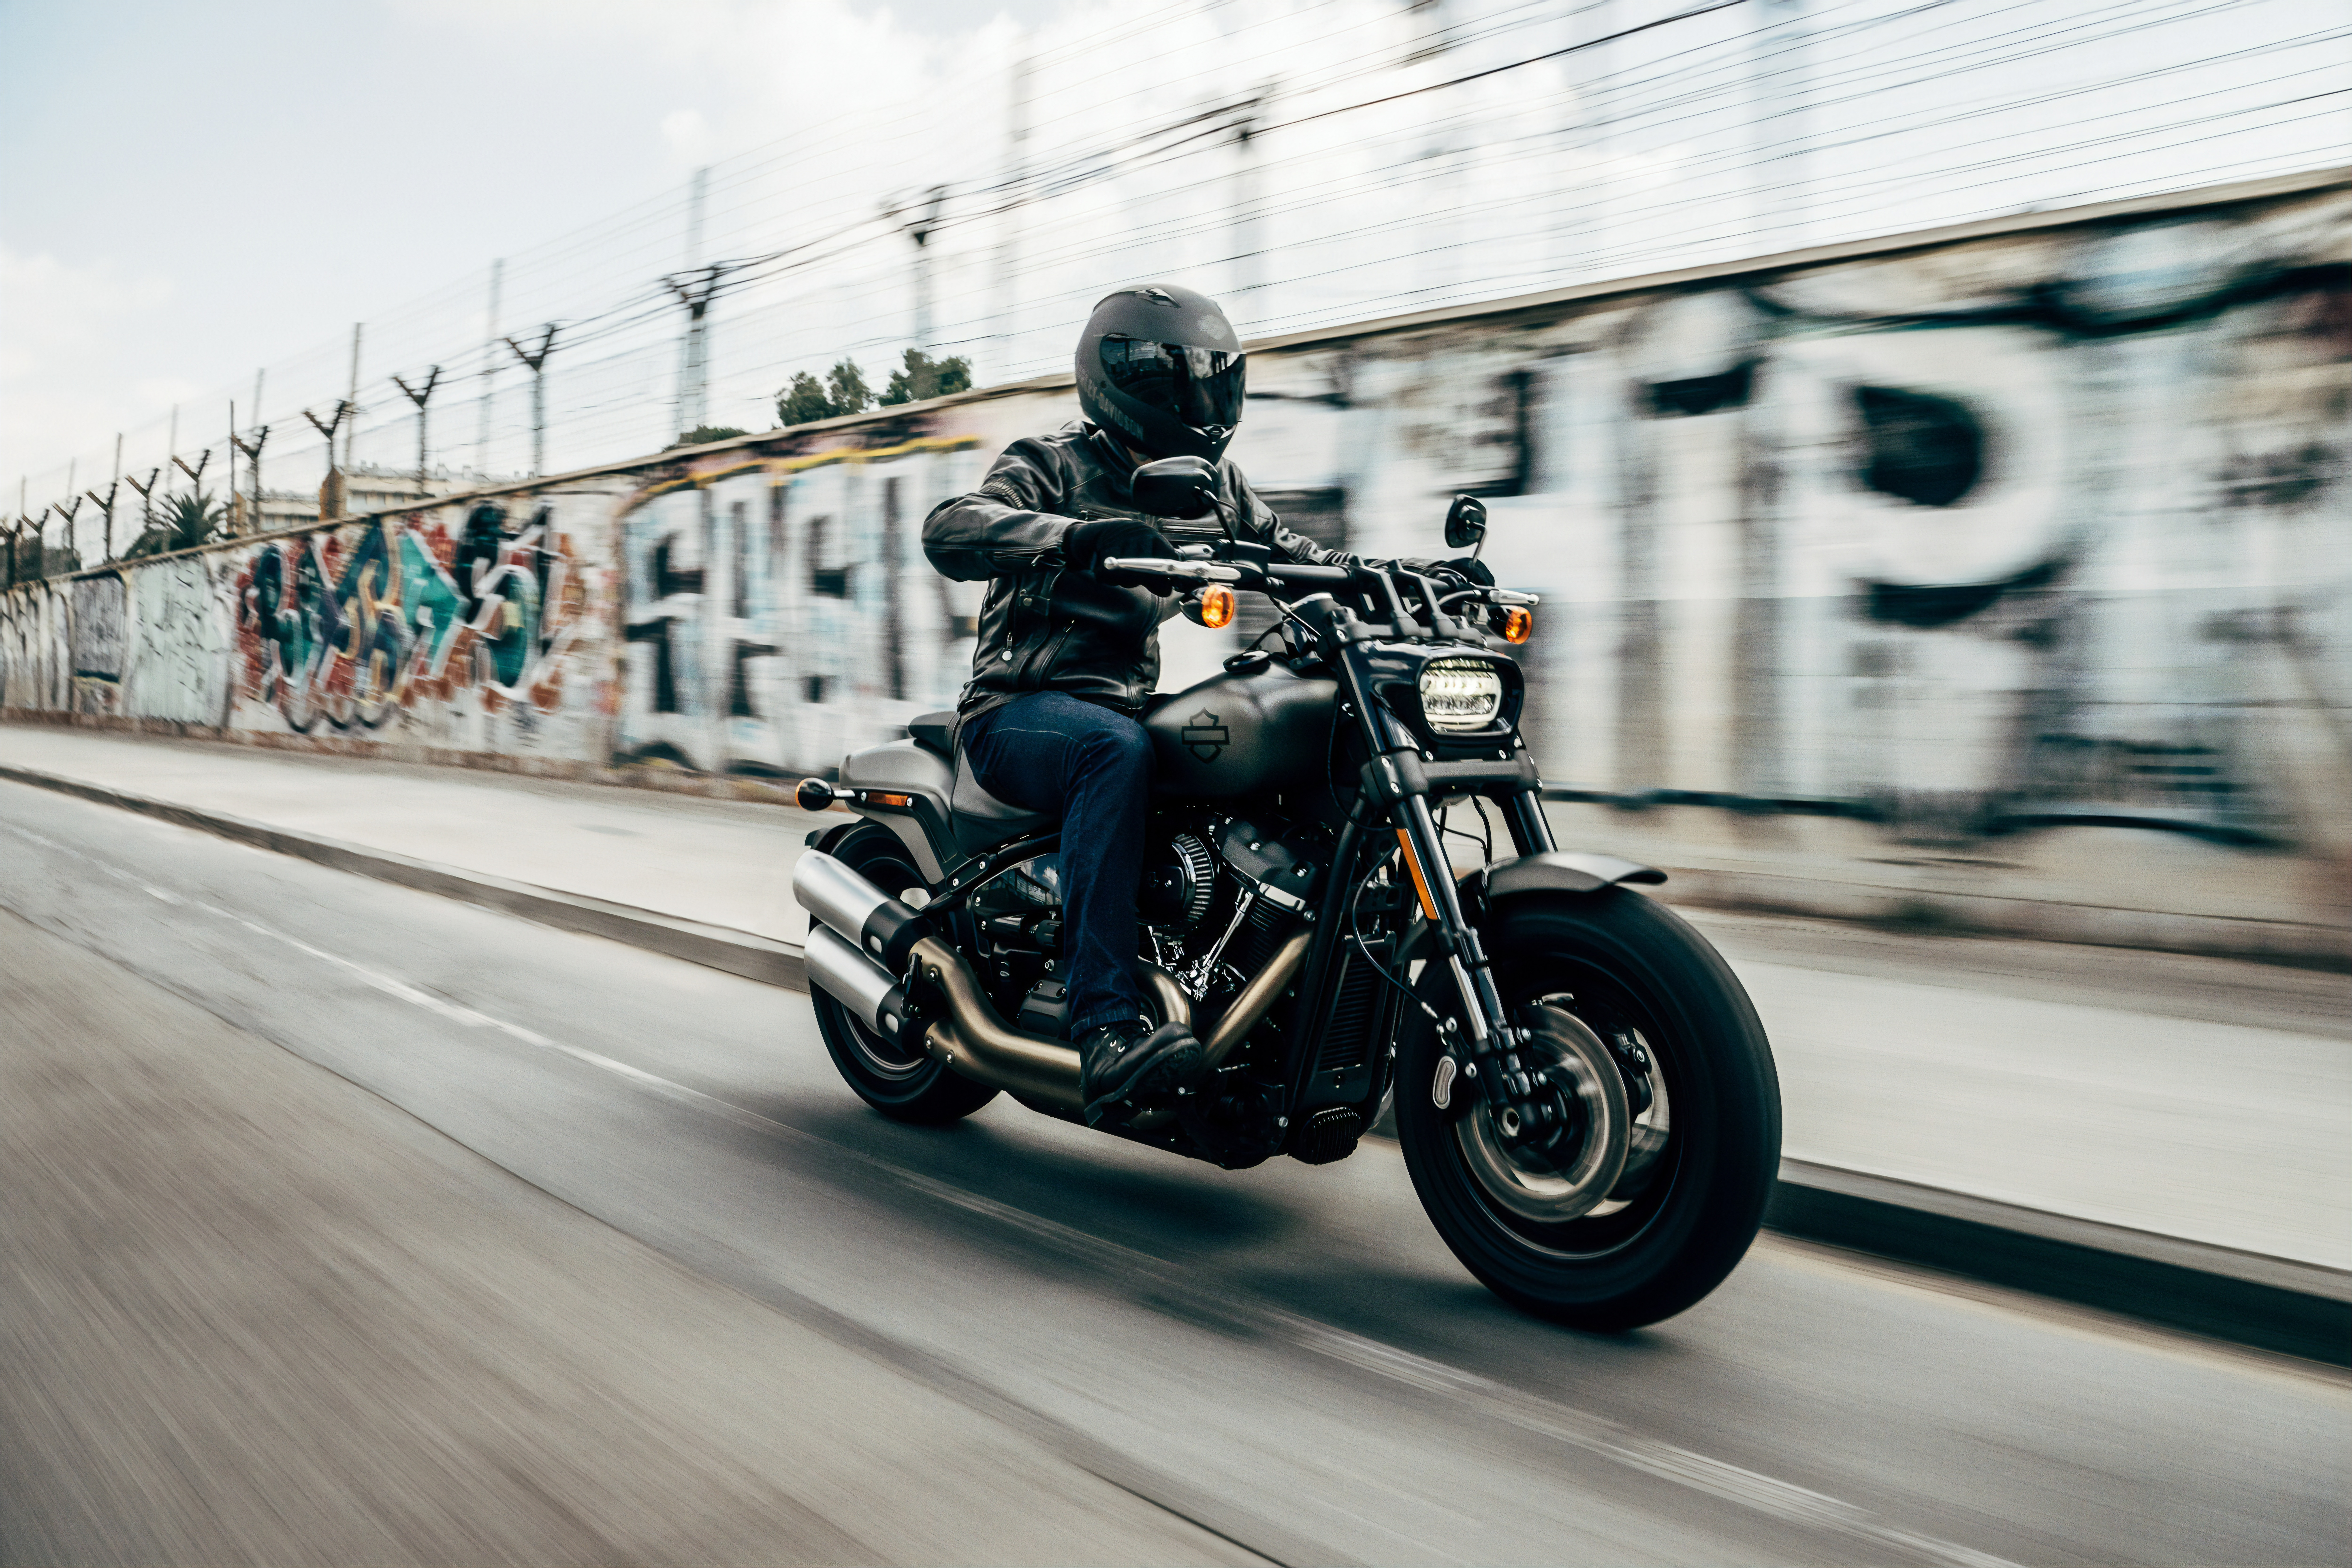 Cool Backgrounds motorcycles, biker, speed, bike Harley Davidson